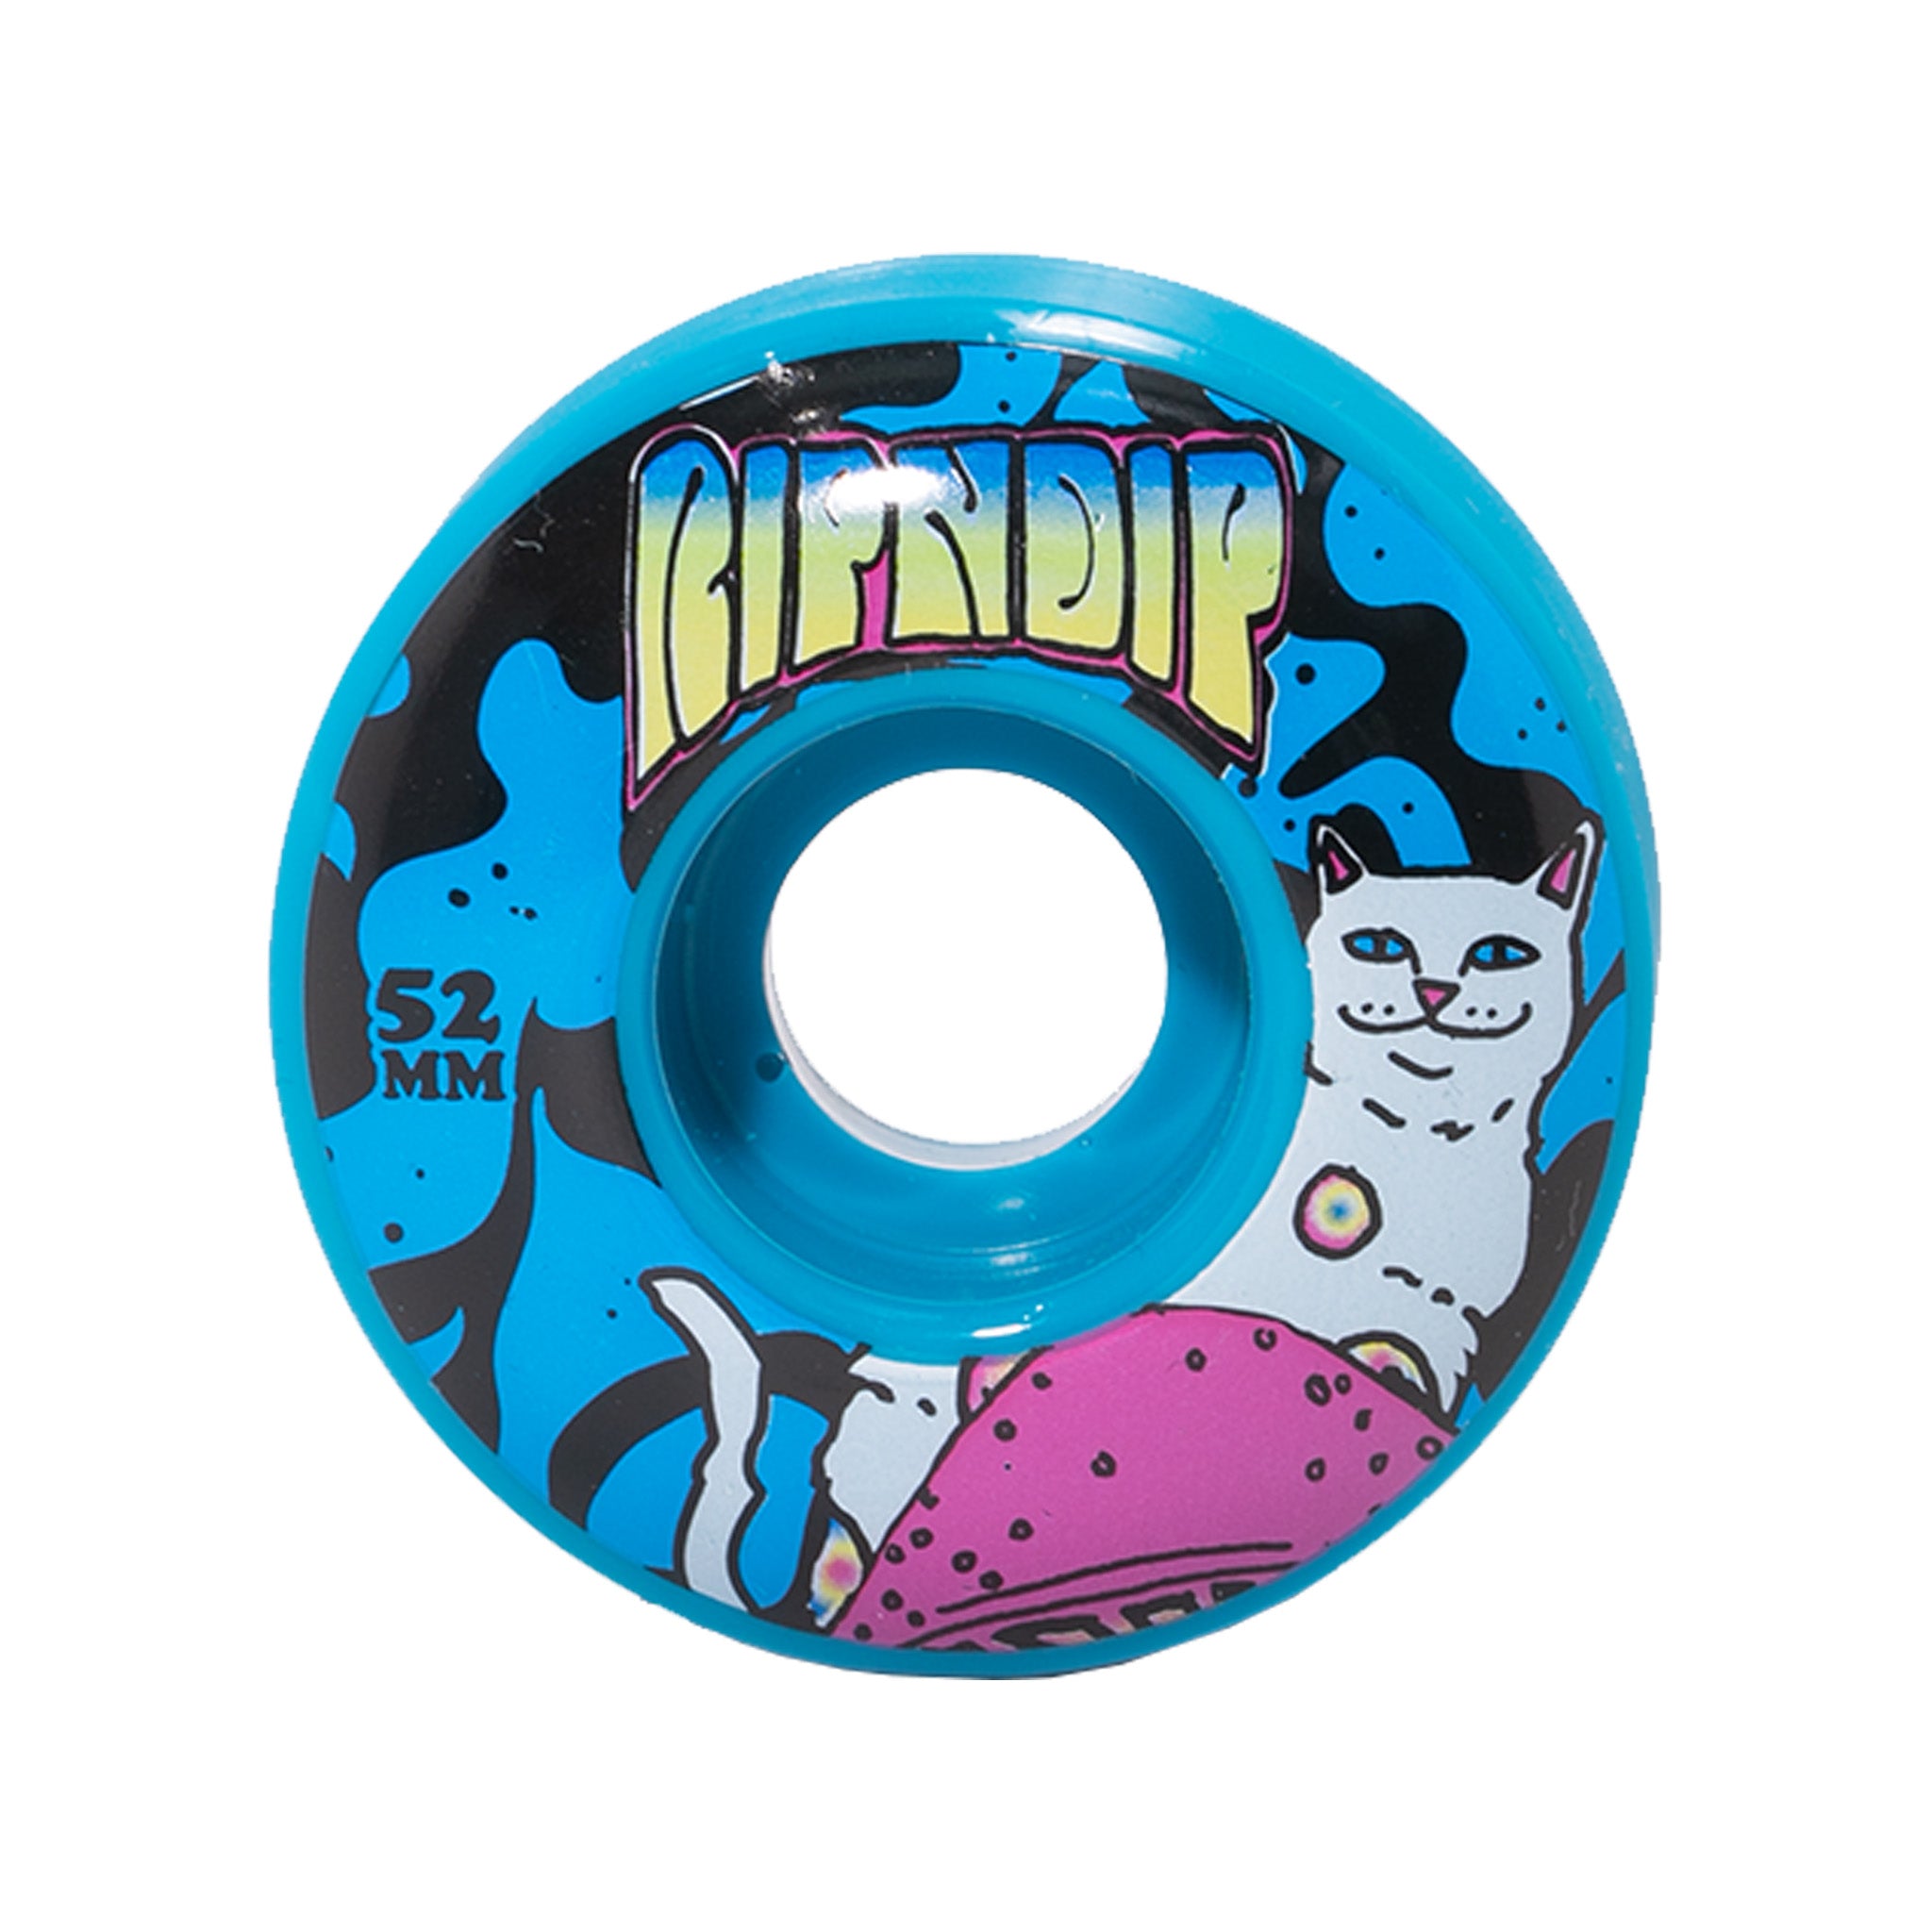 RipNDip Psychedelic Skate Wheels (Blue)